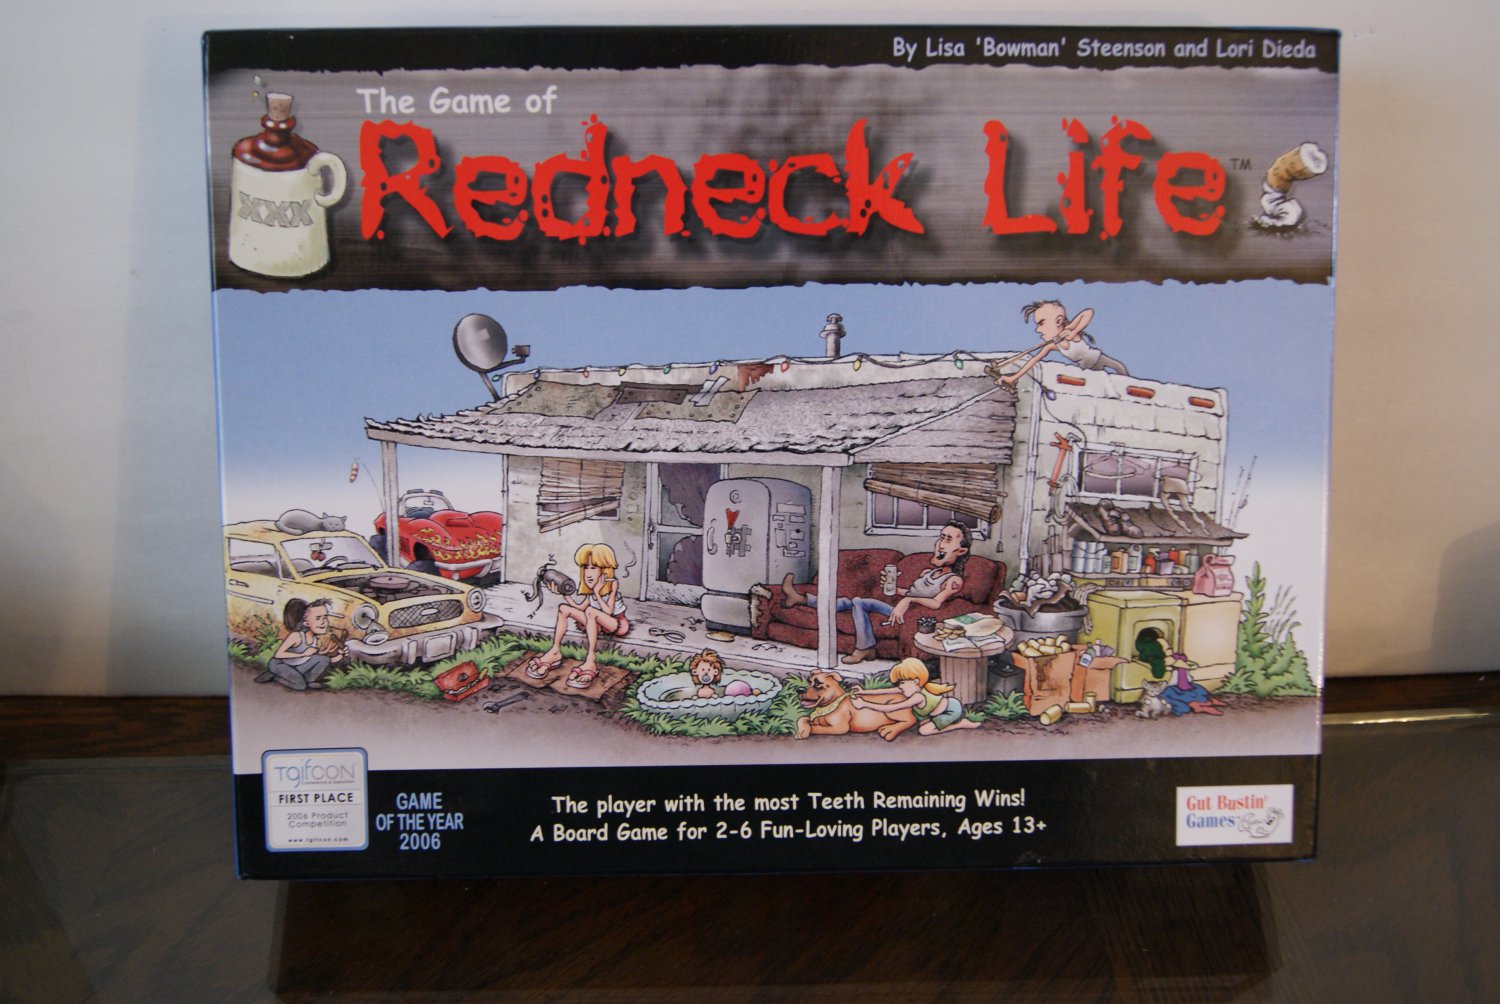 redneck game of life board